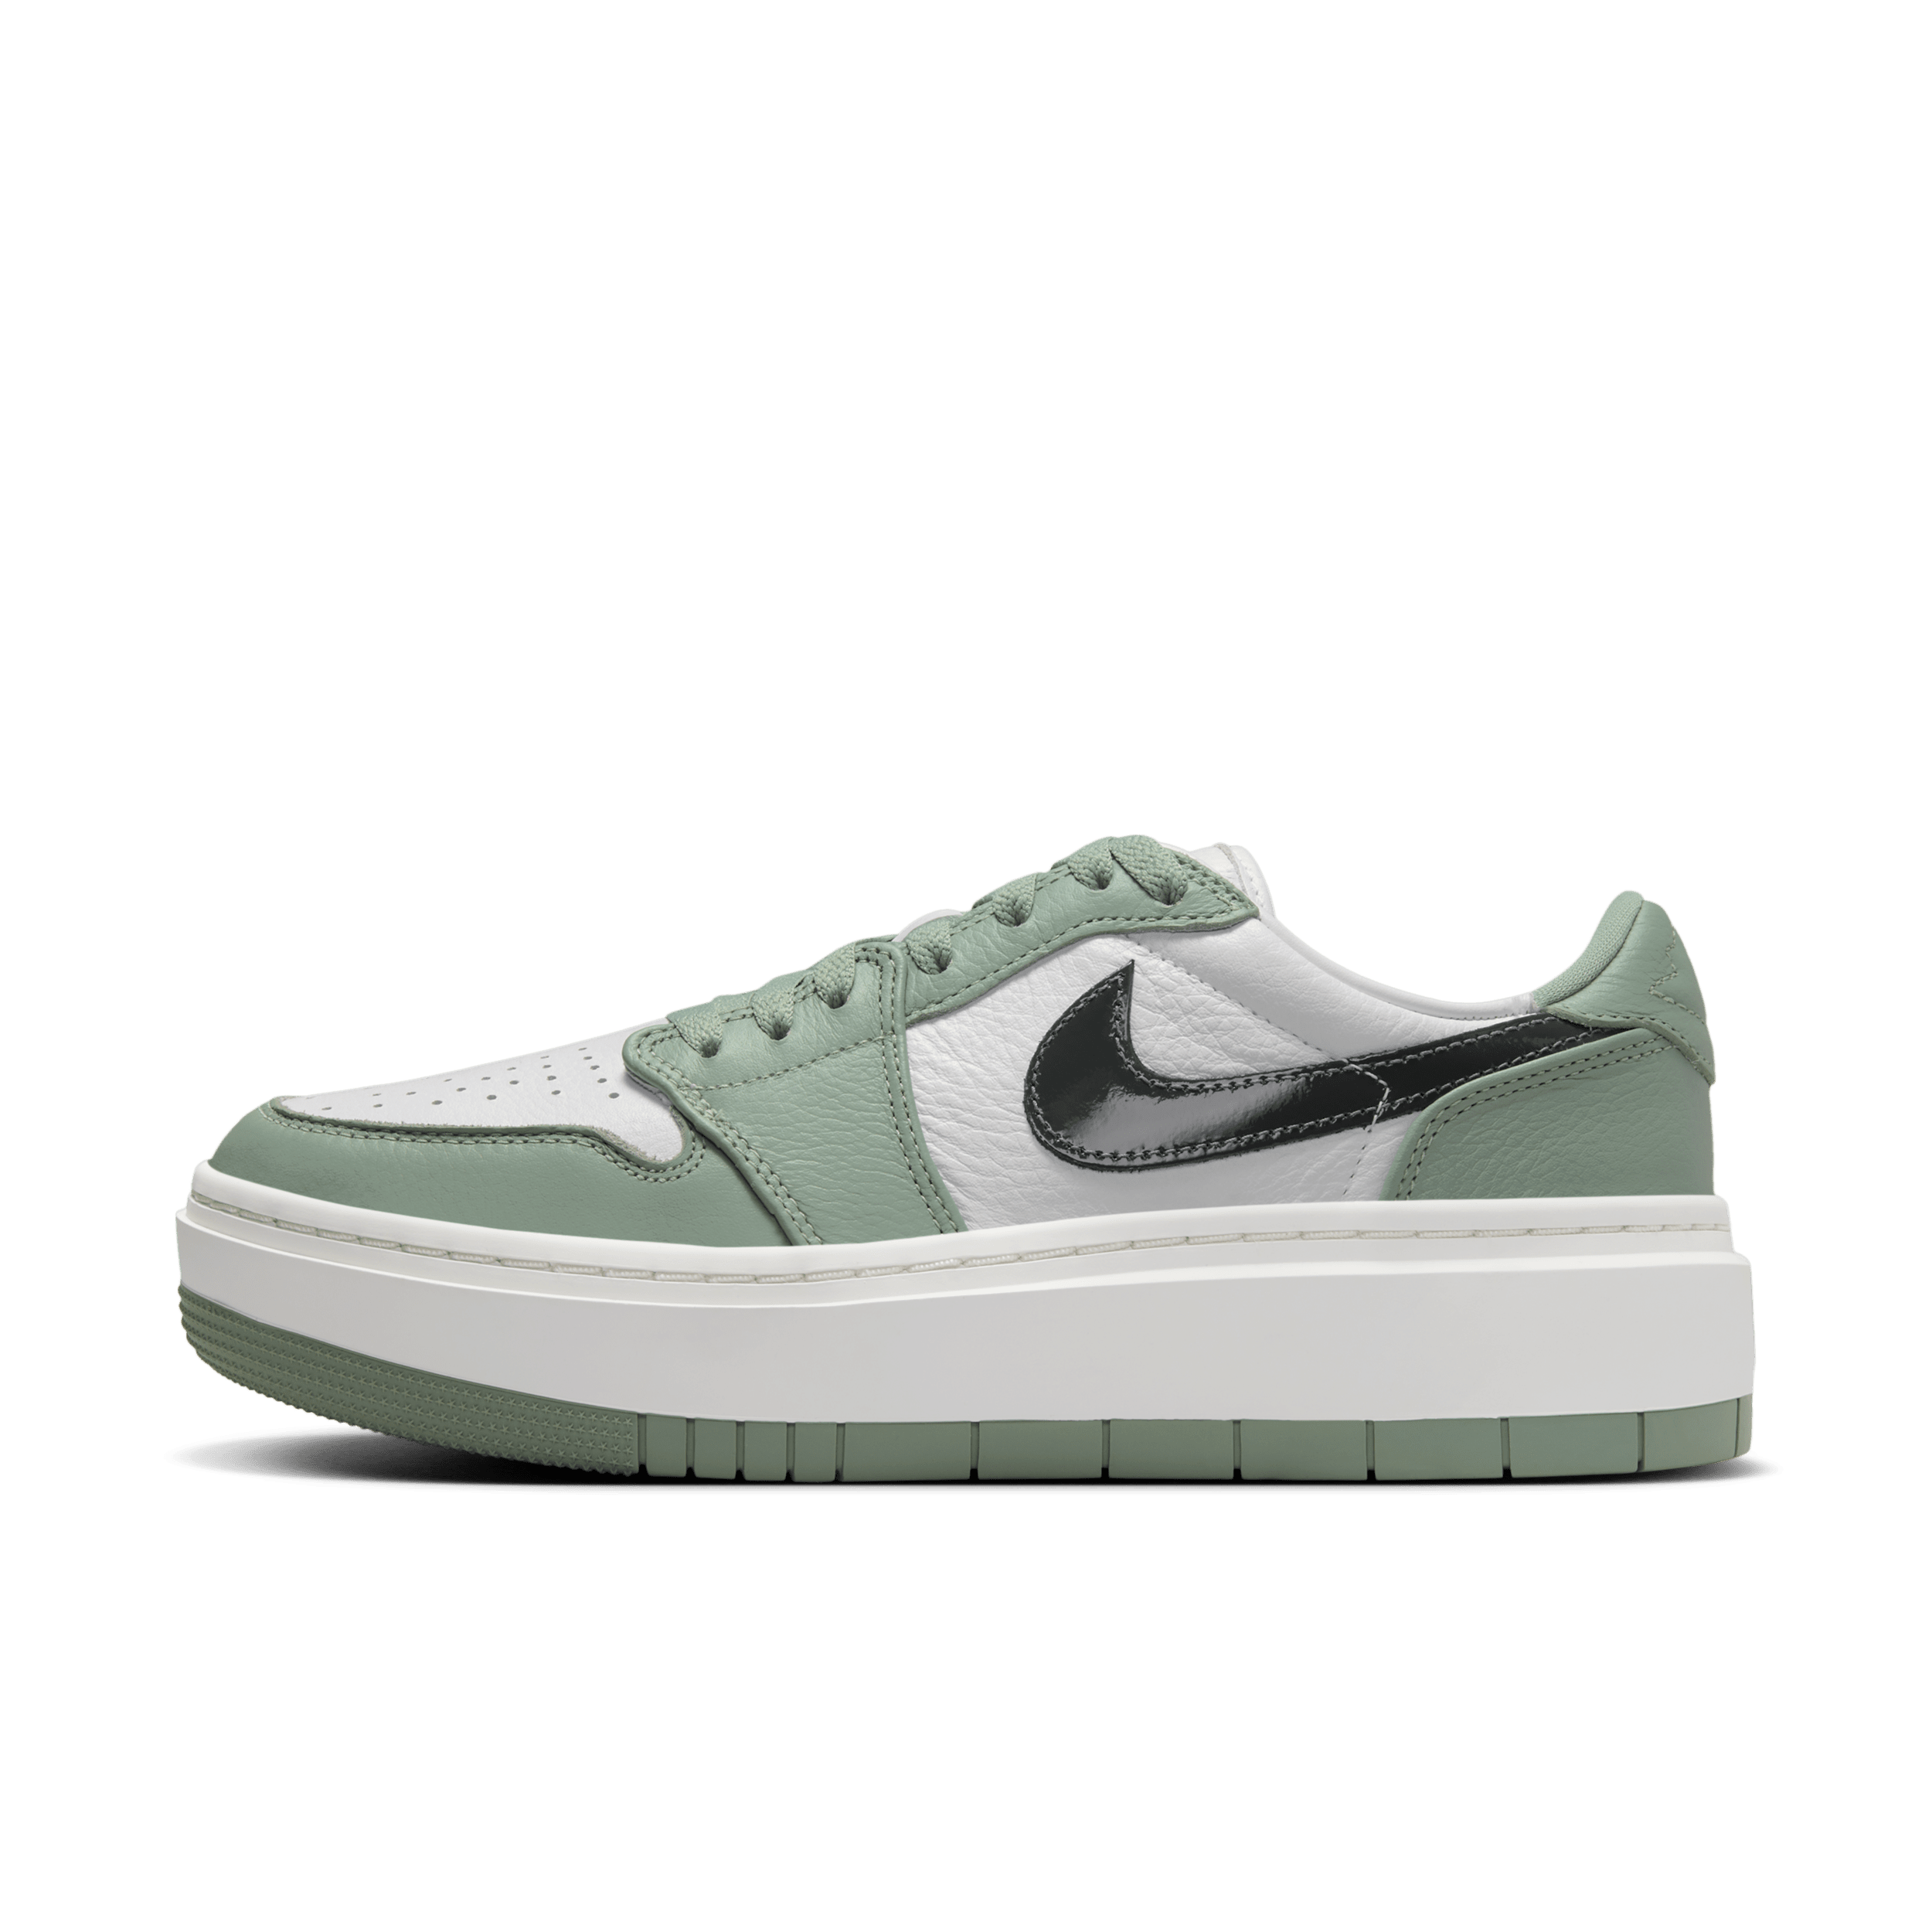 Air Jordan 1 Elevate Low-sko til kvinder - grøn